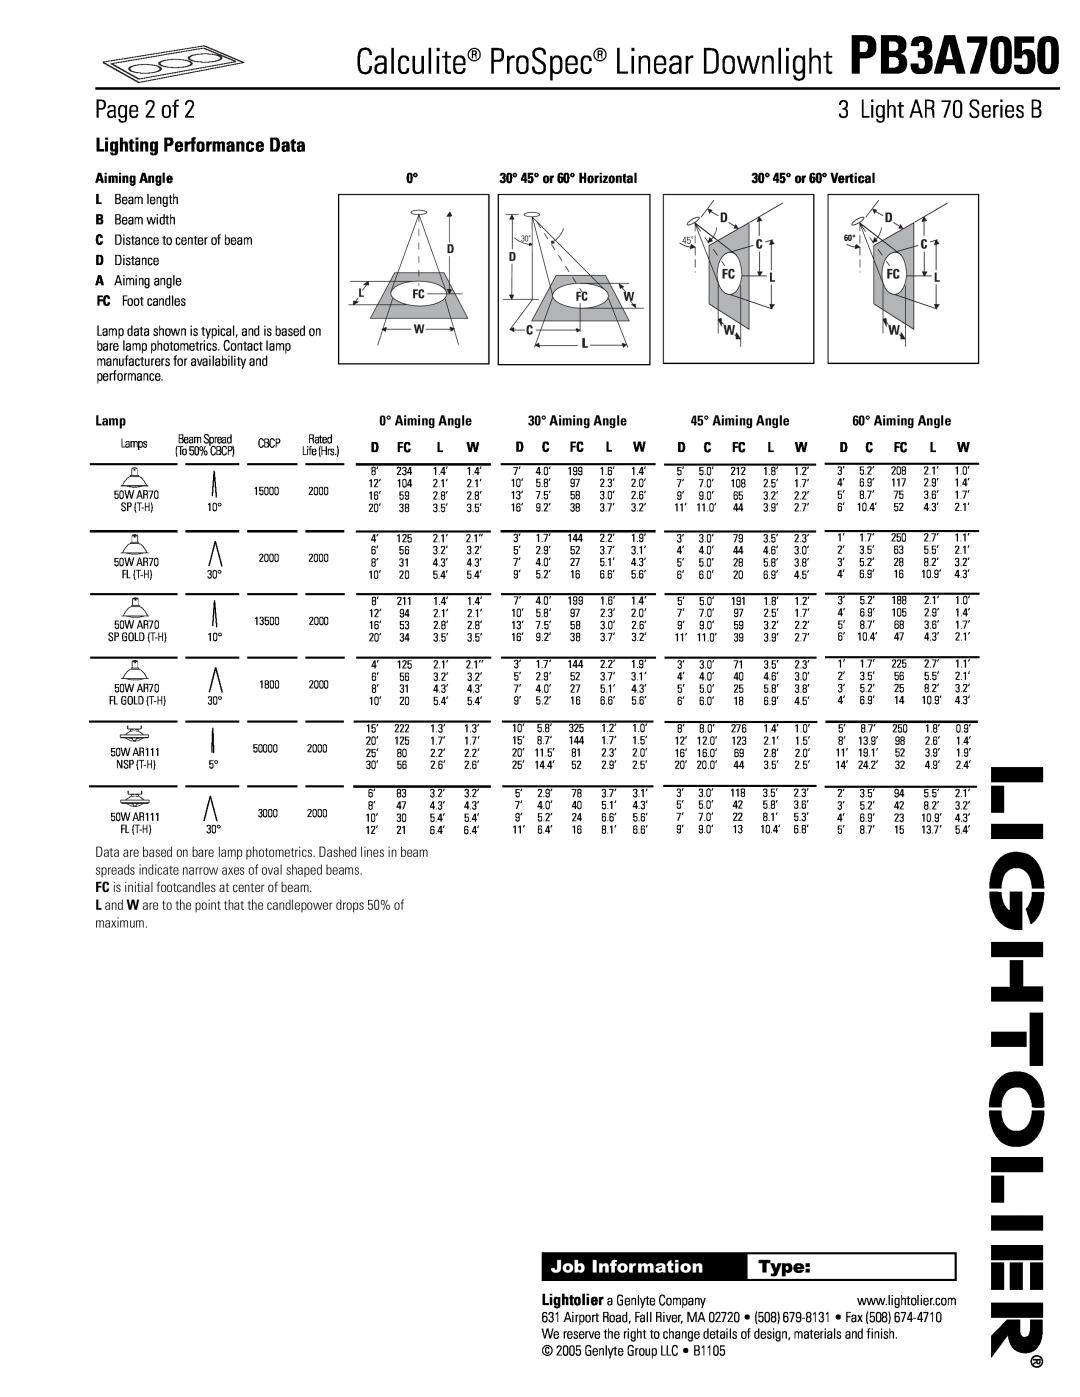 Lightolier PB3A7050 manual Page 2 of, Light AR 70 Series B, Lighting Performance Data, Job Information, Type 